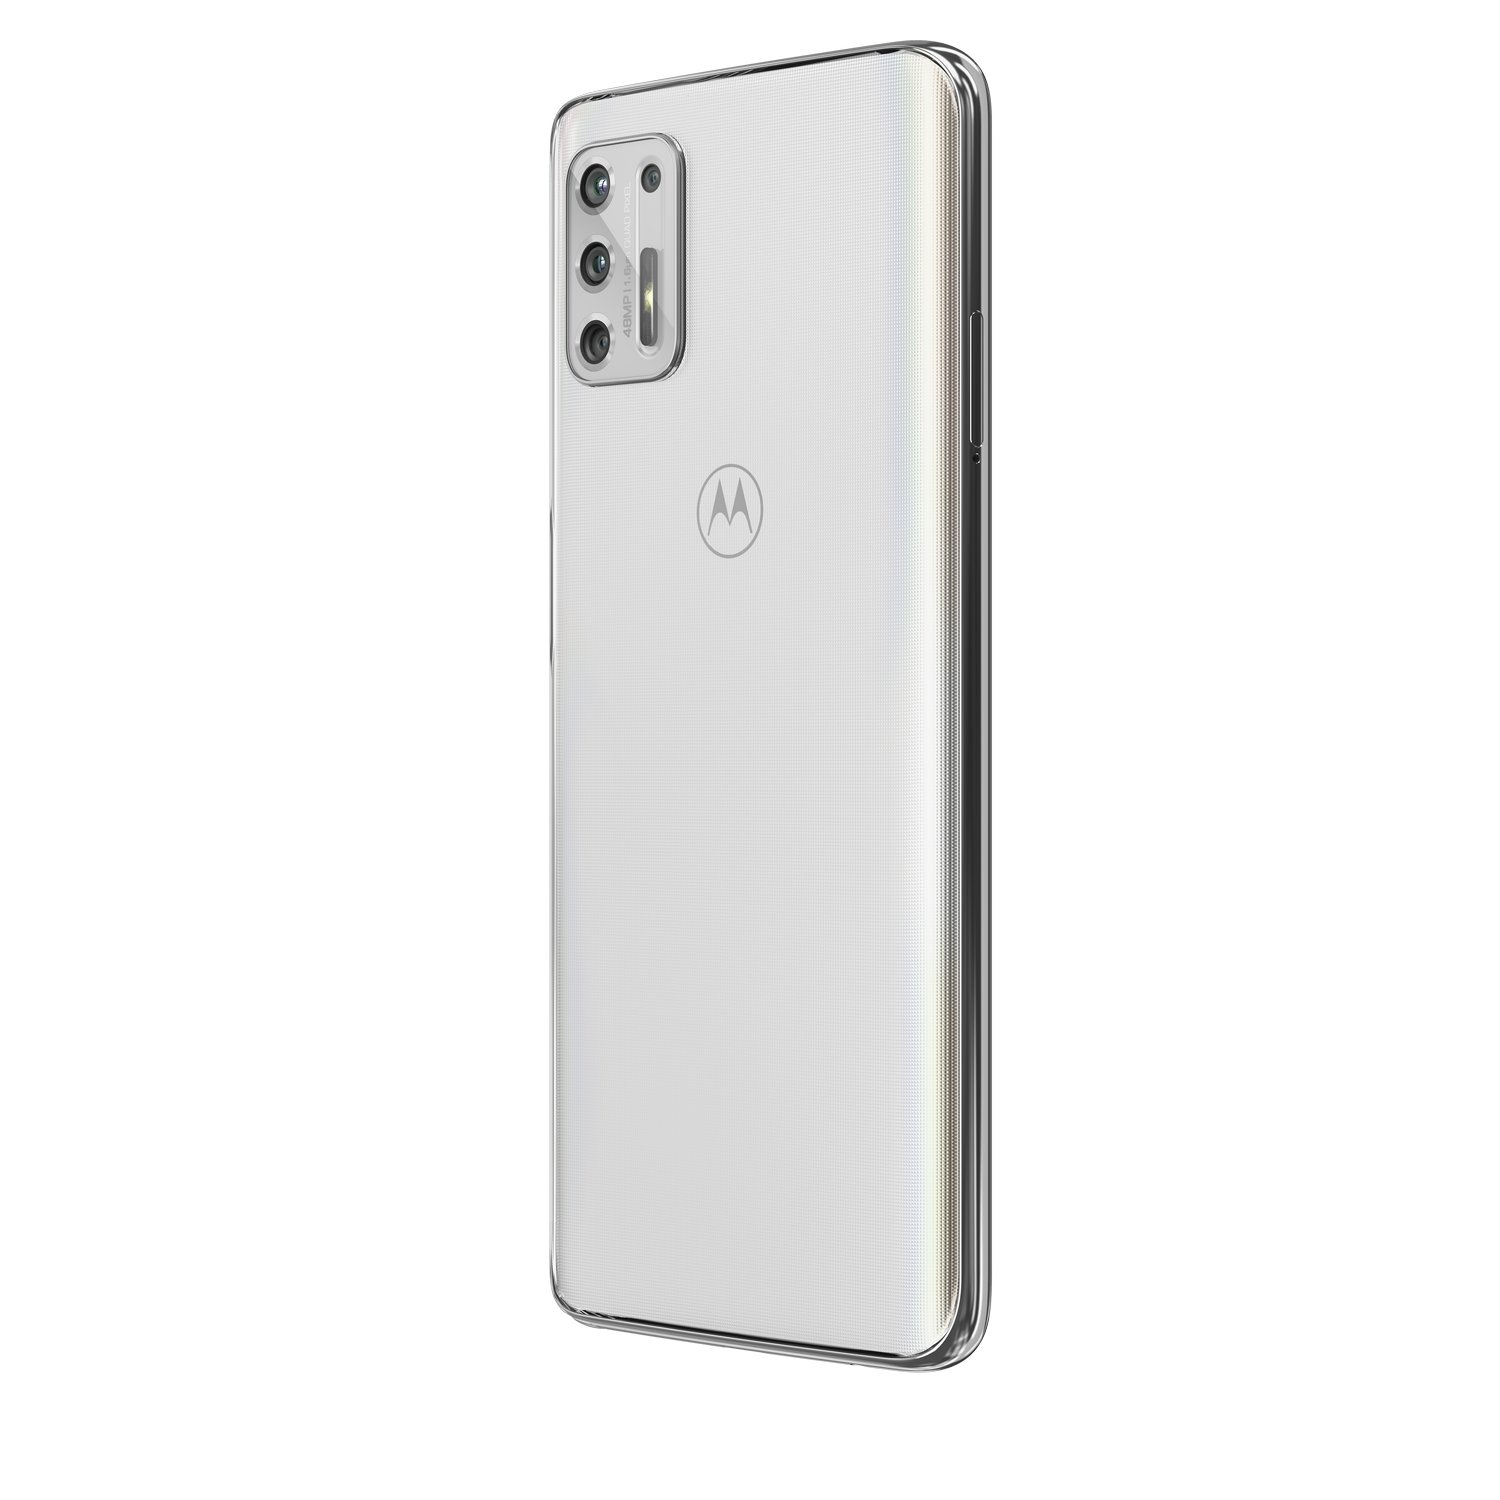 Motorola Moto G Stylus (2021) caracteristicas e